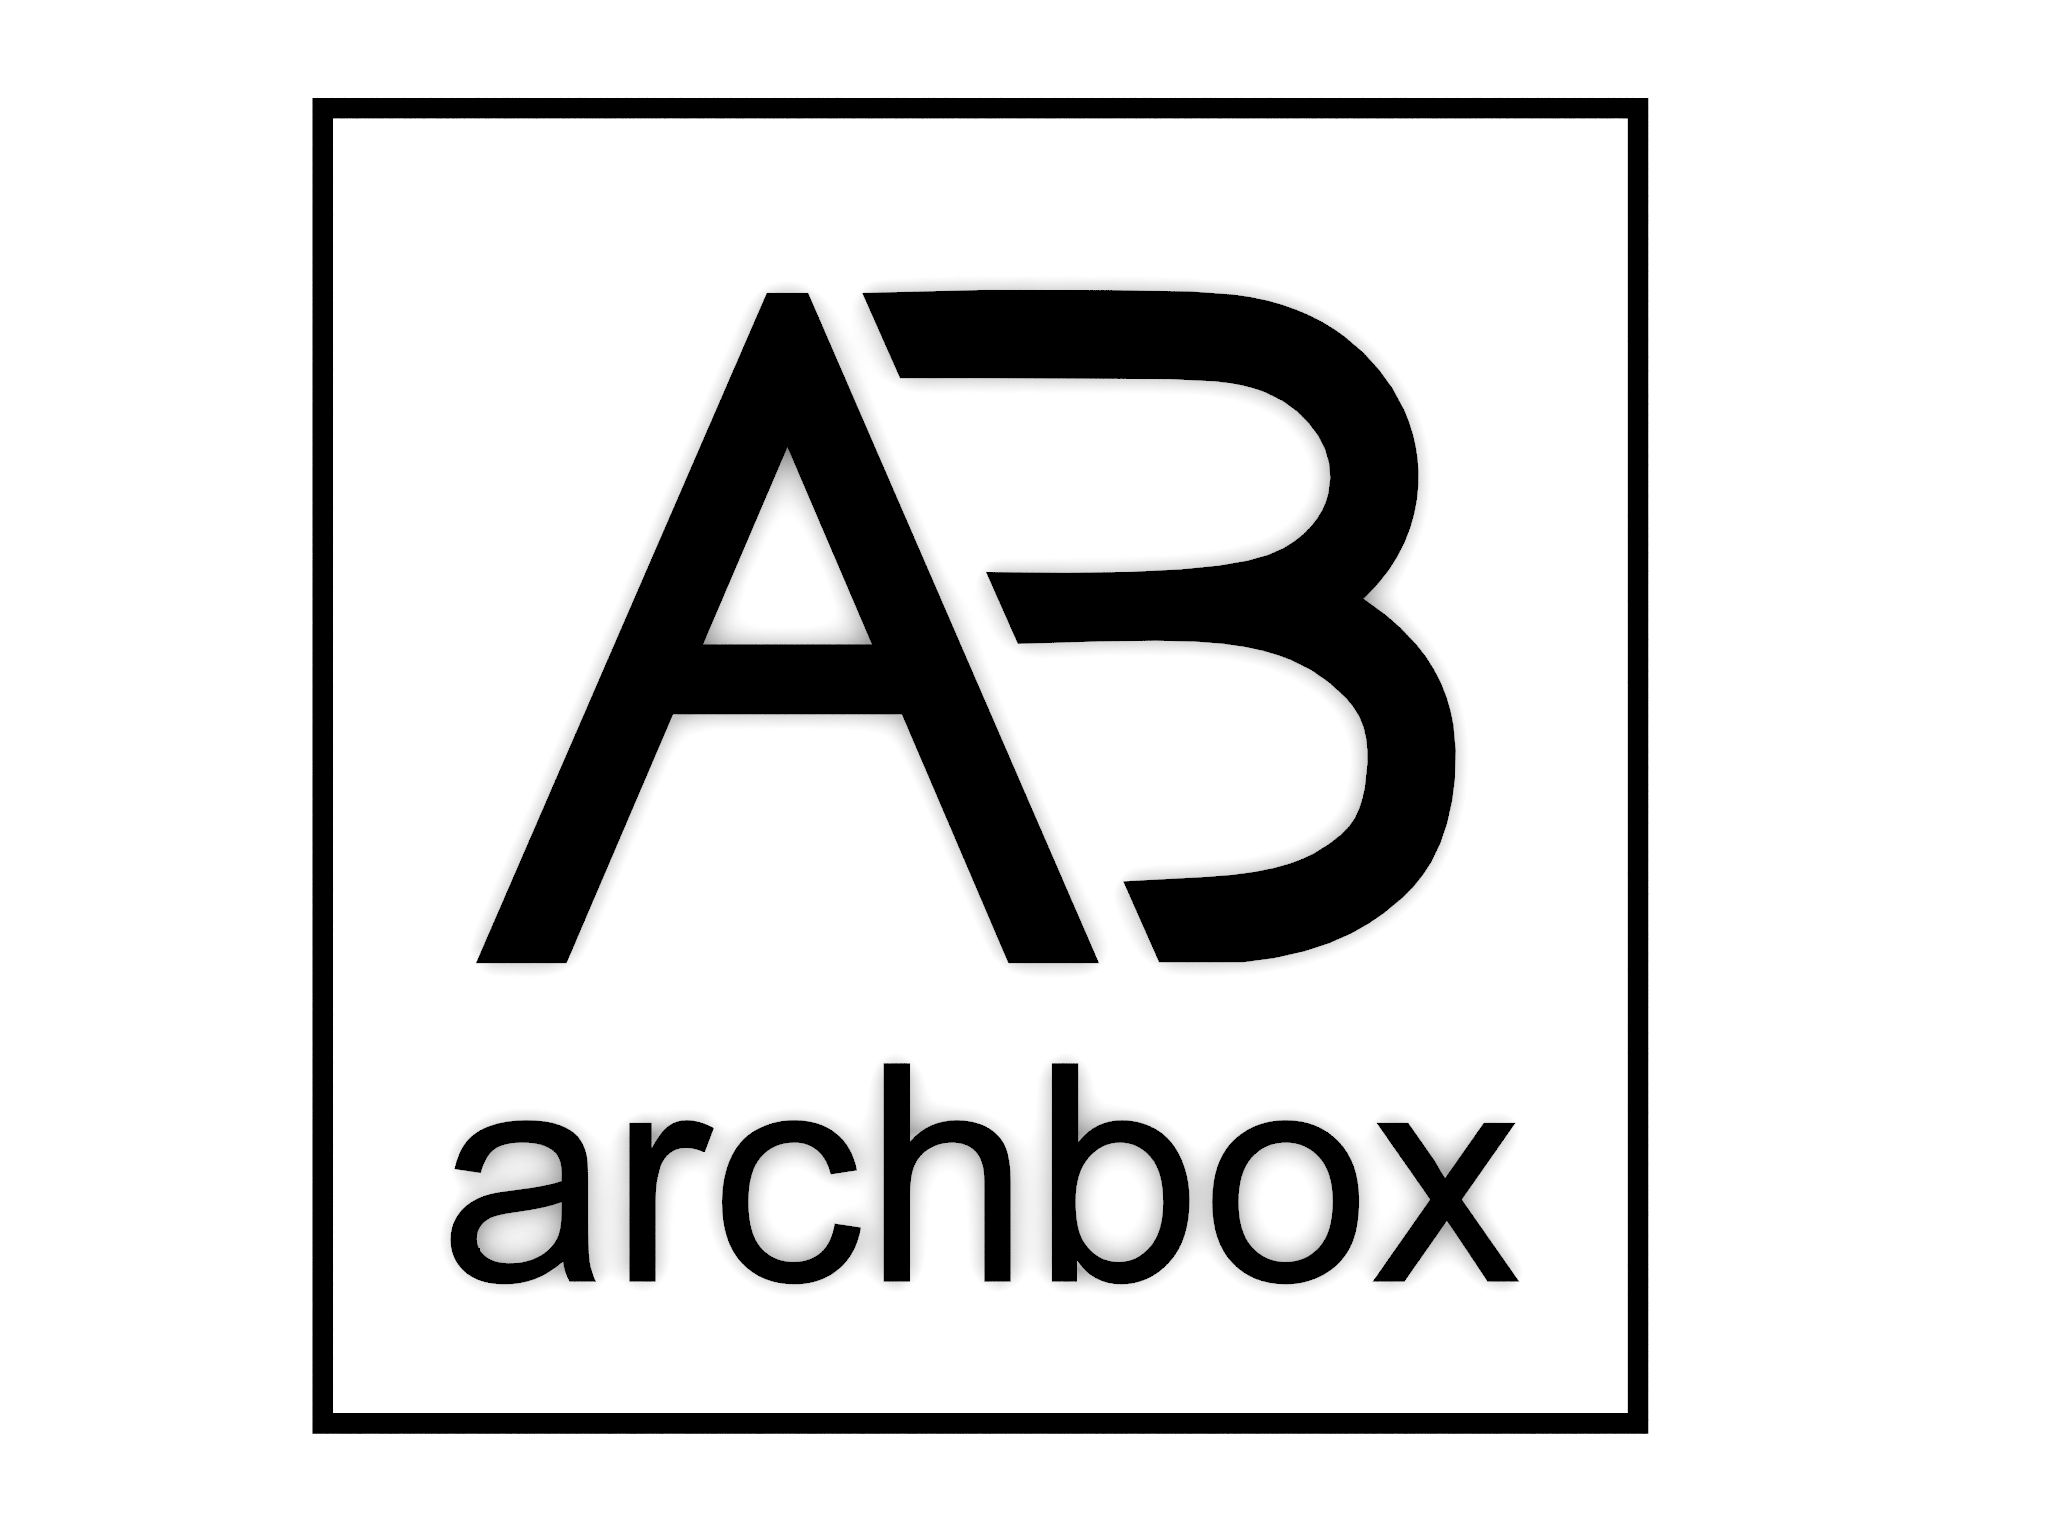 Archbox